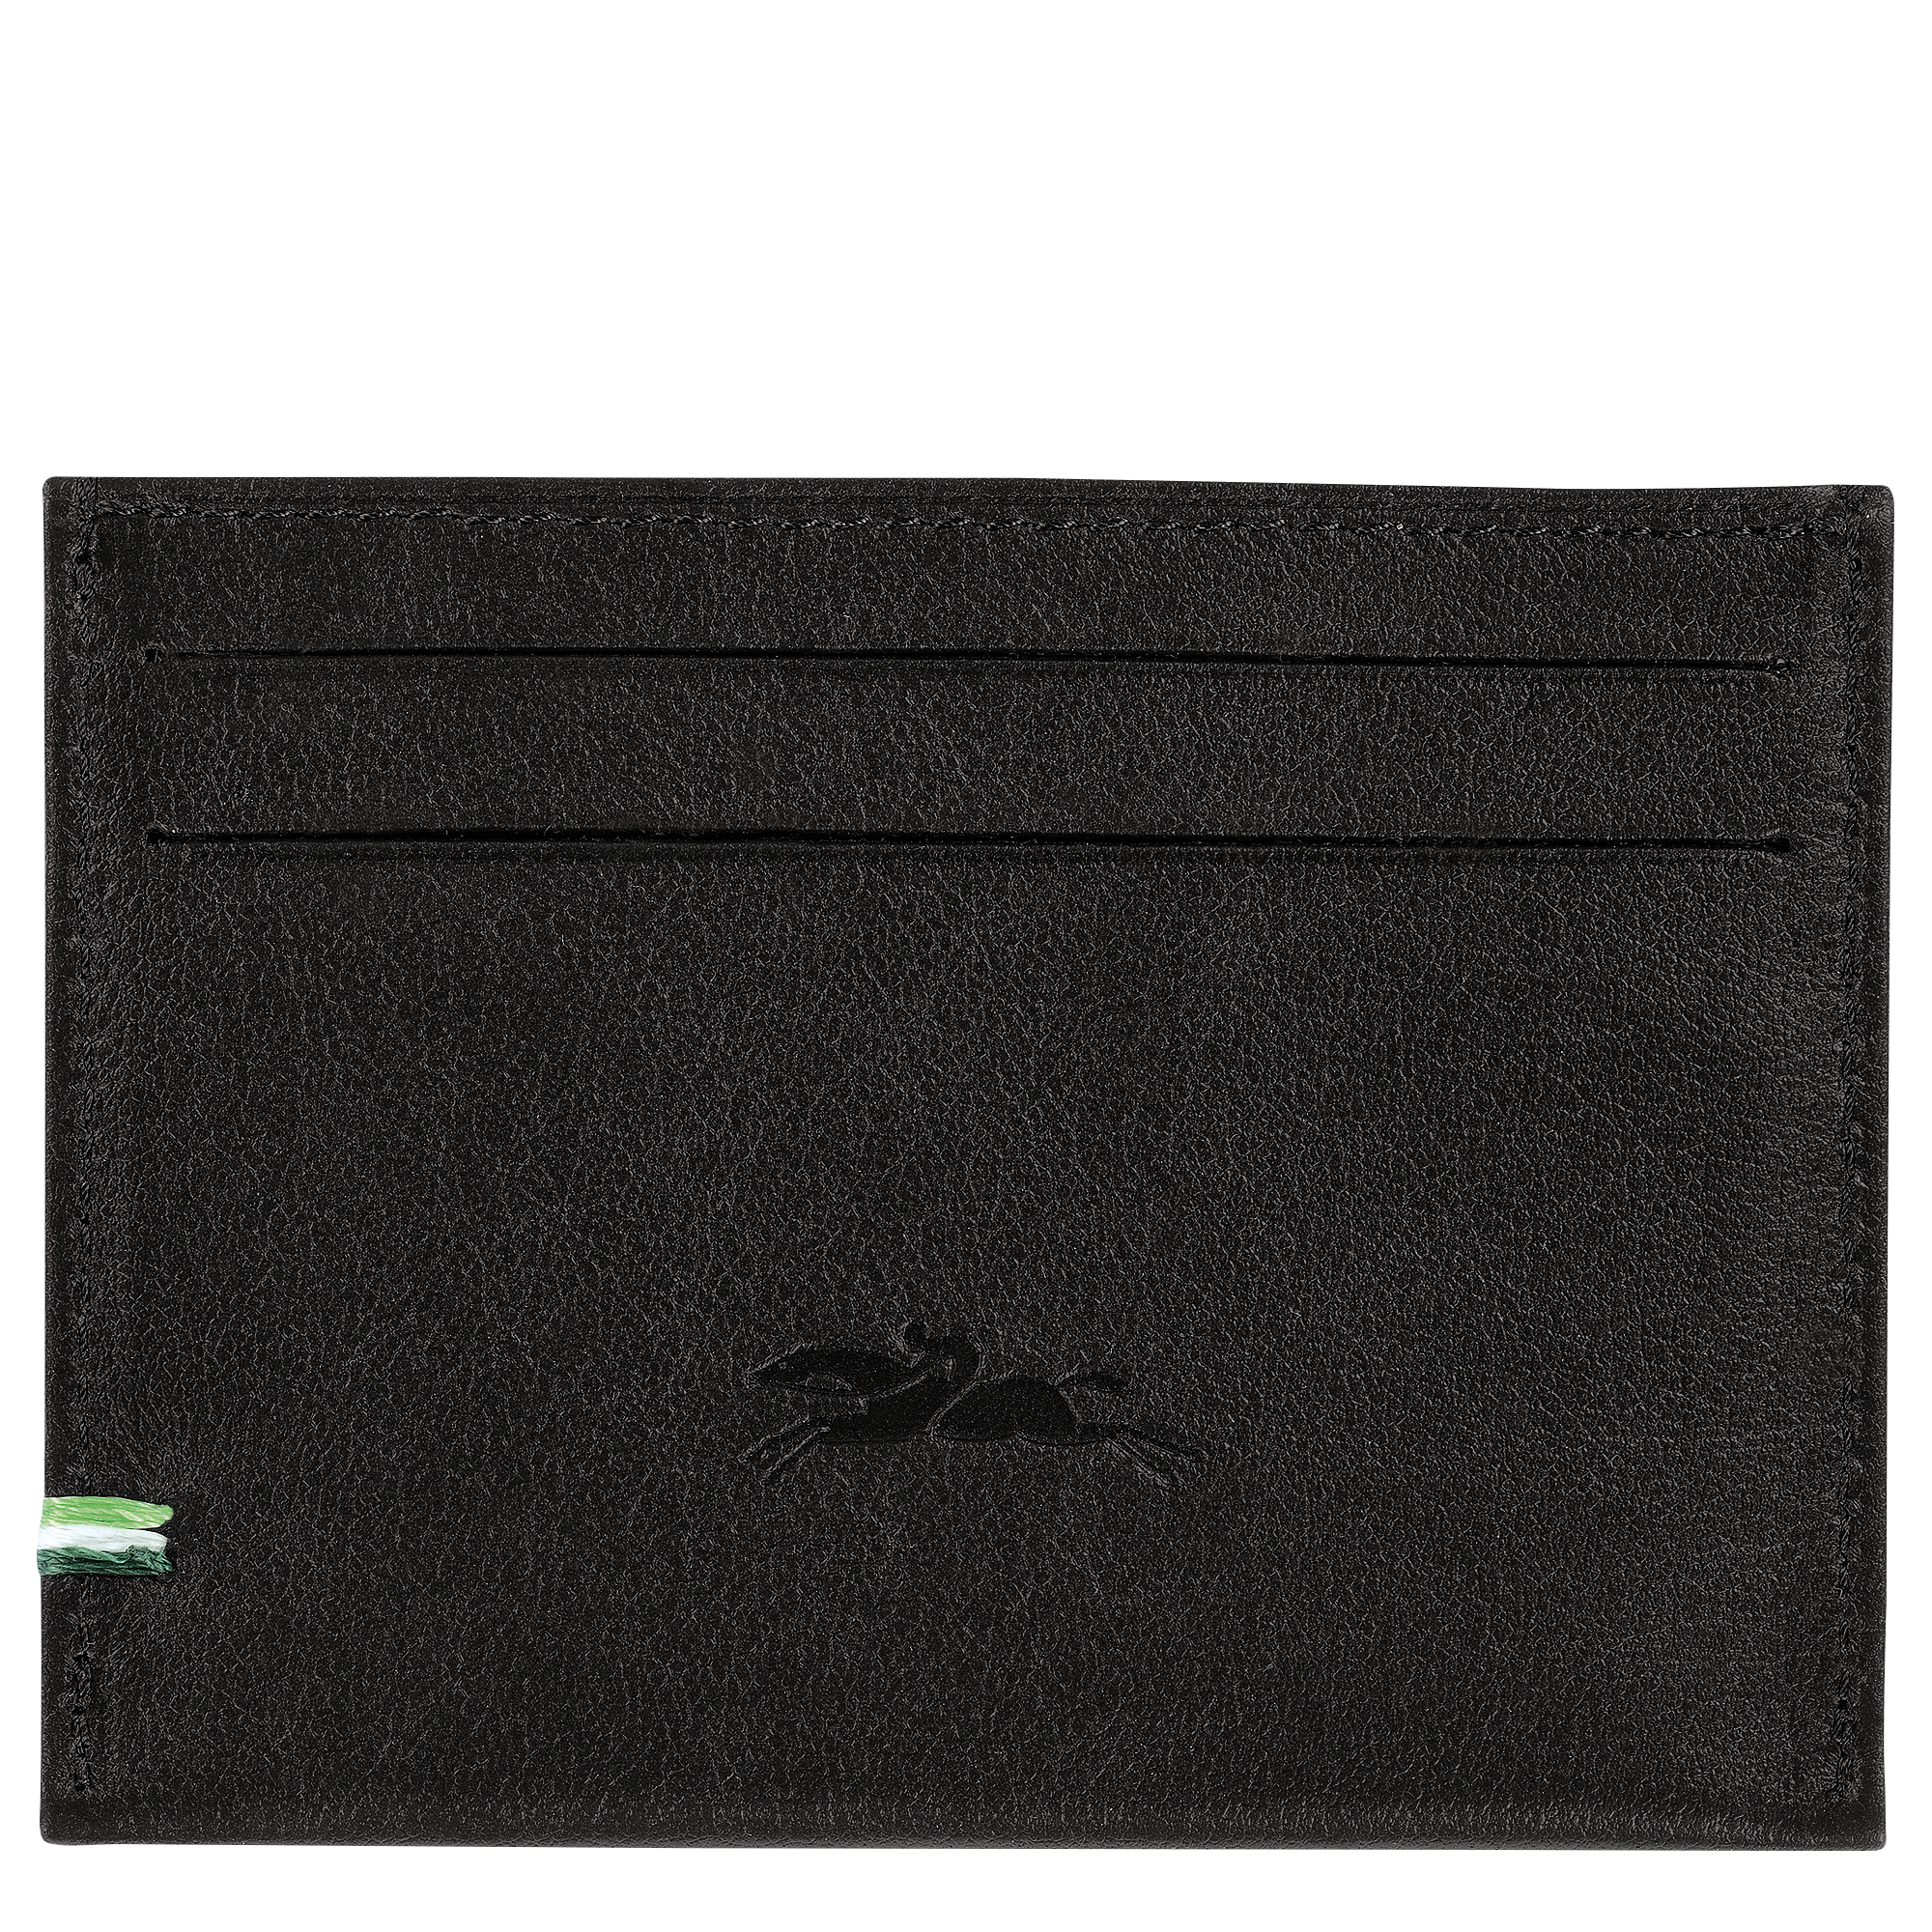 Longchamp sur Seine 卡片夾, 黑色